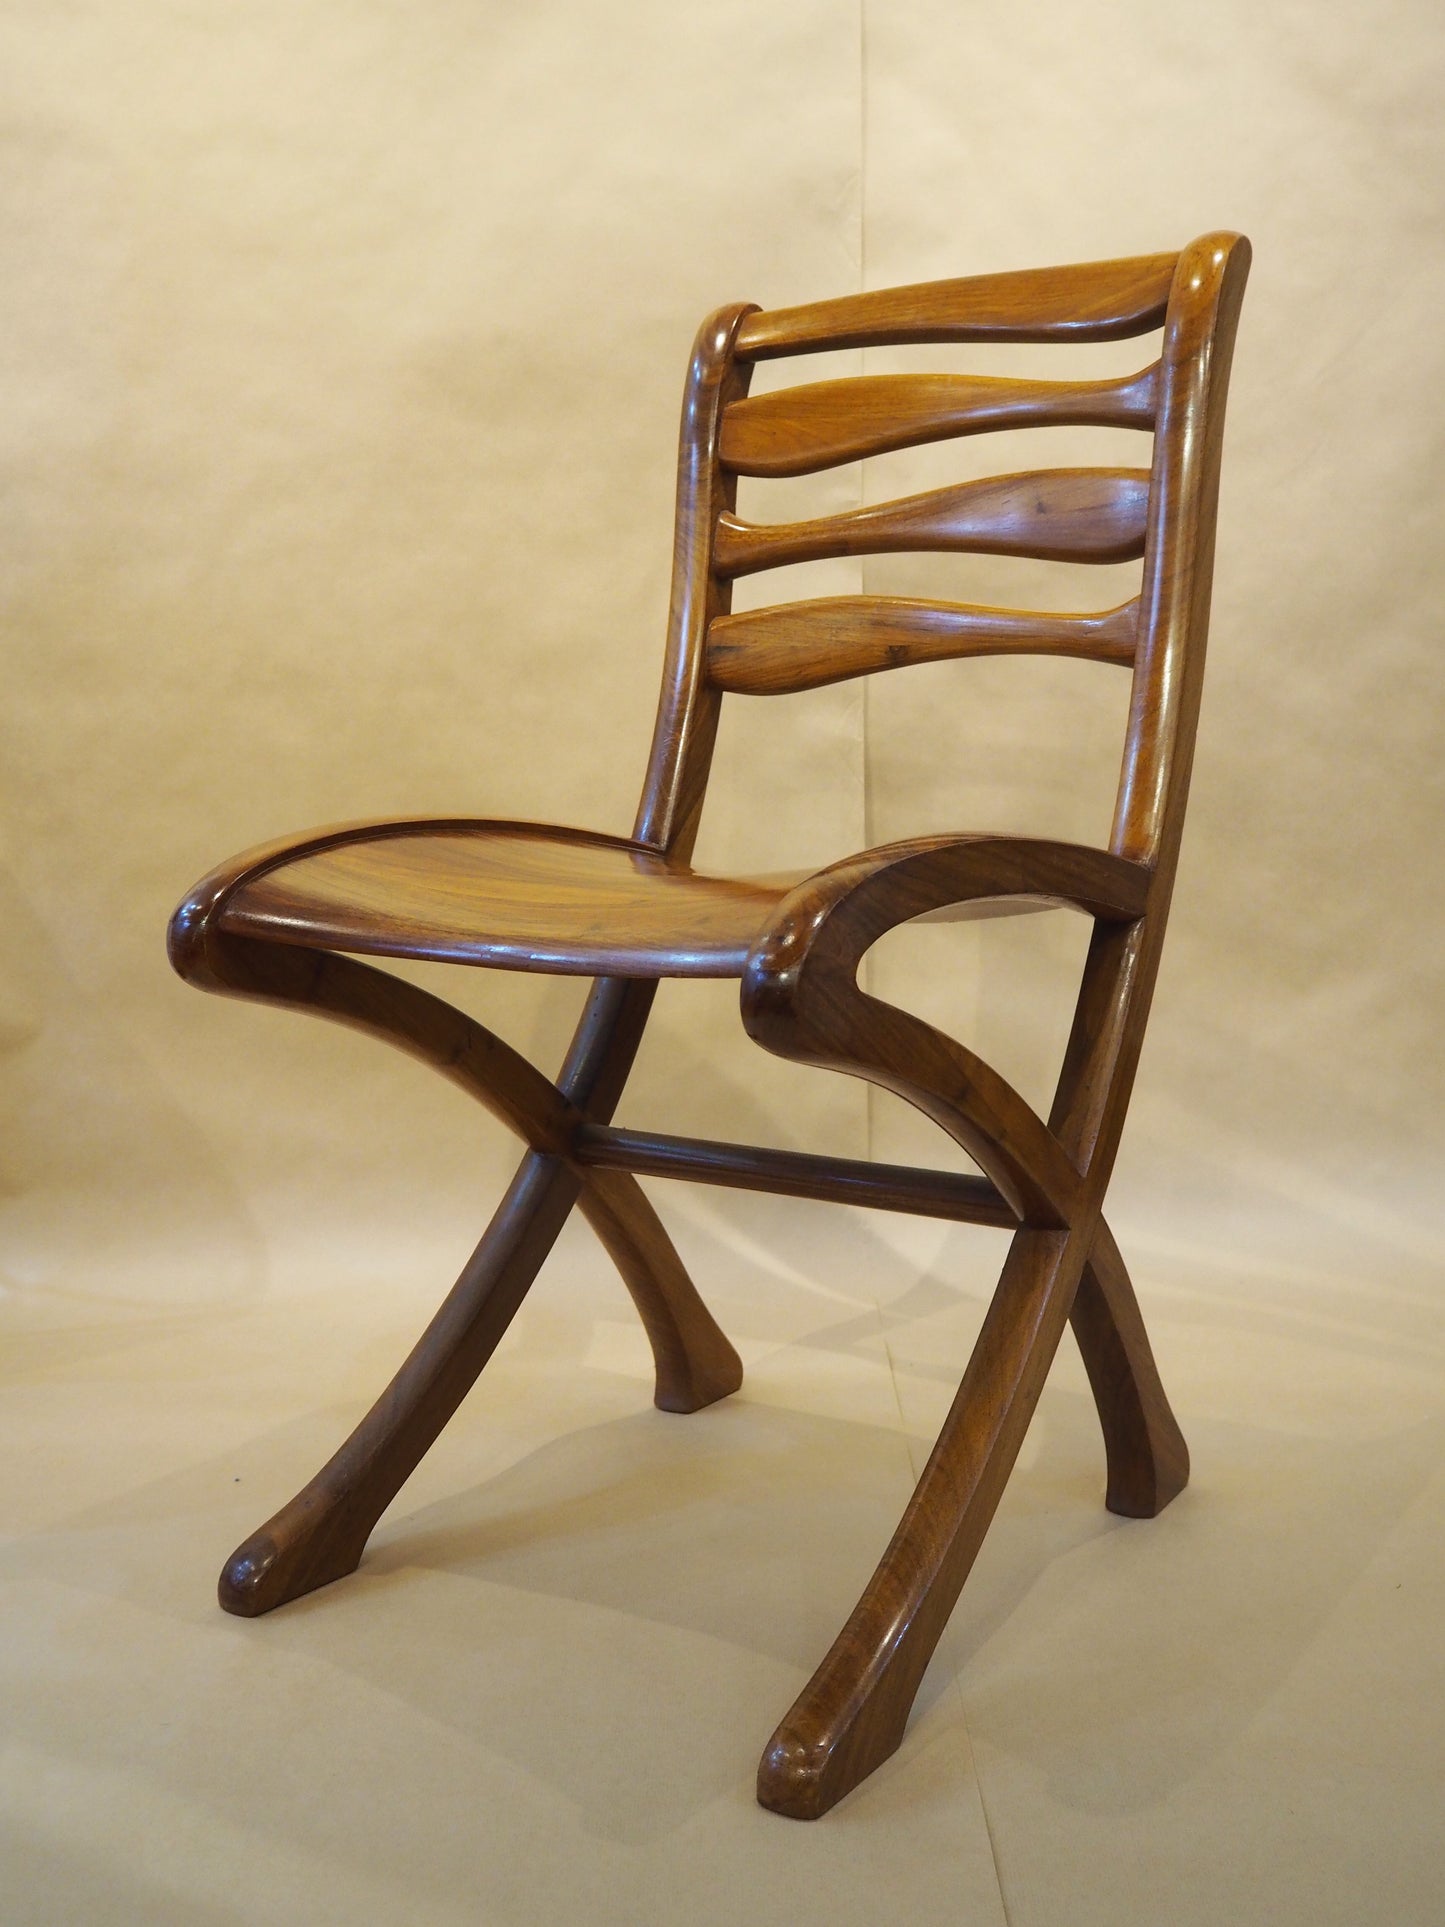 Rampelberg, Marc – Muninga Chair